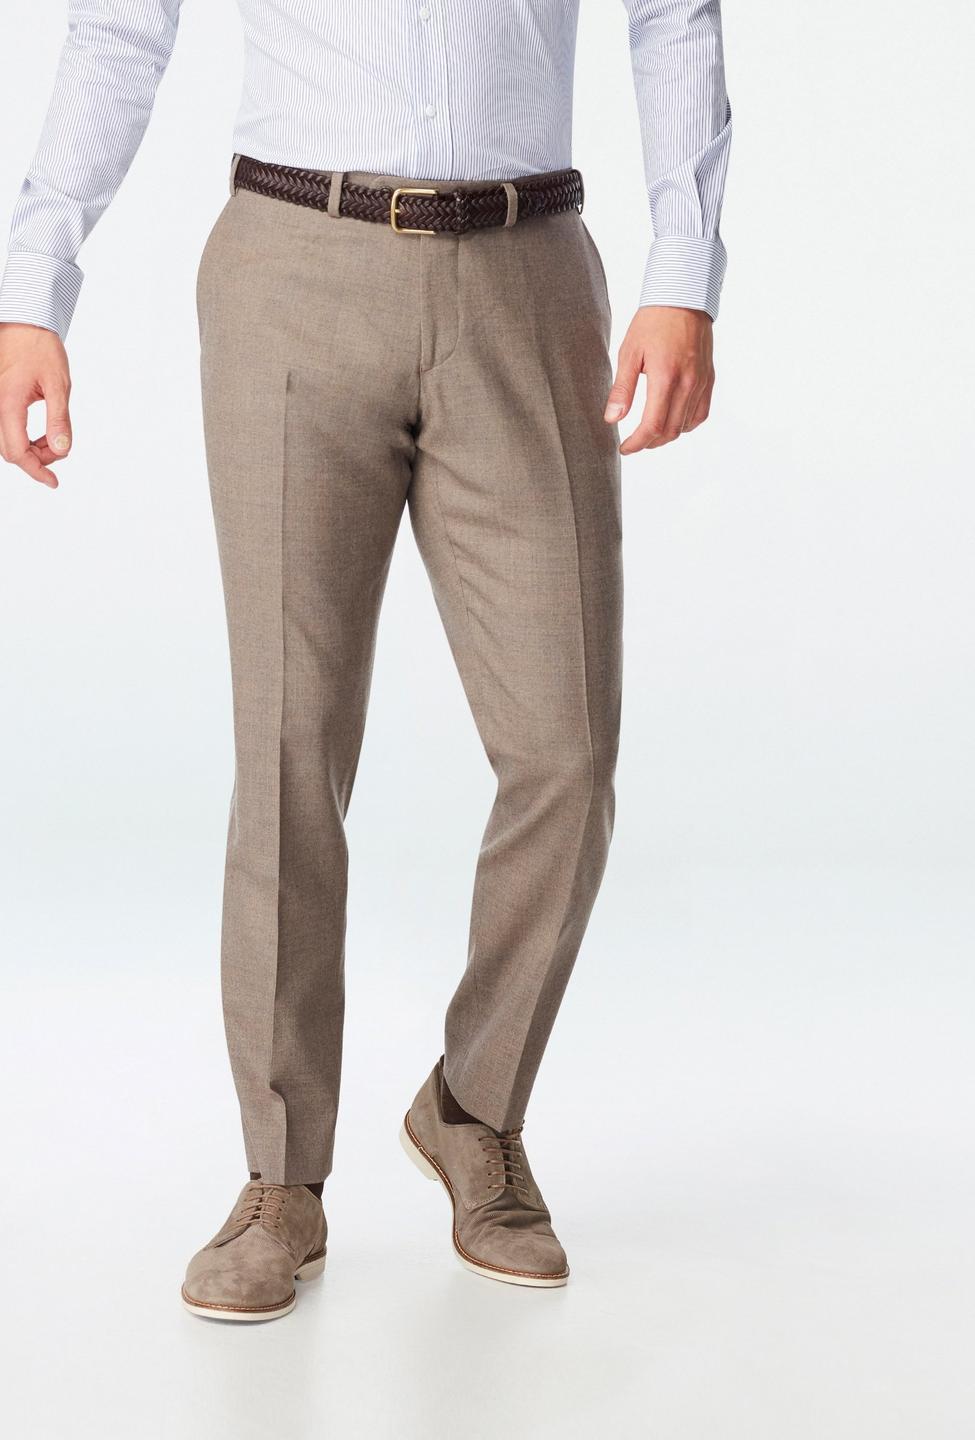 Hayward Flannel Light Brown Pants